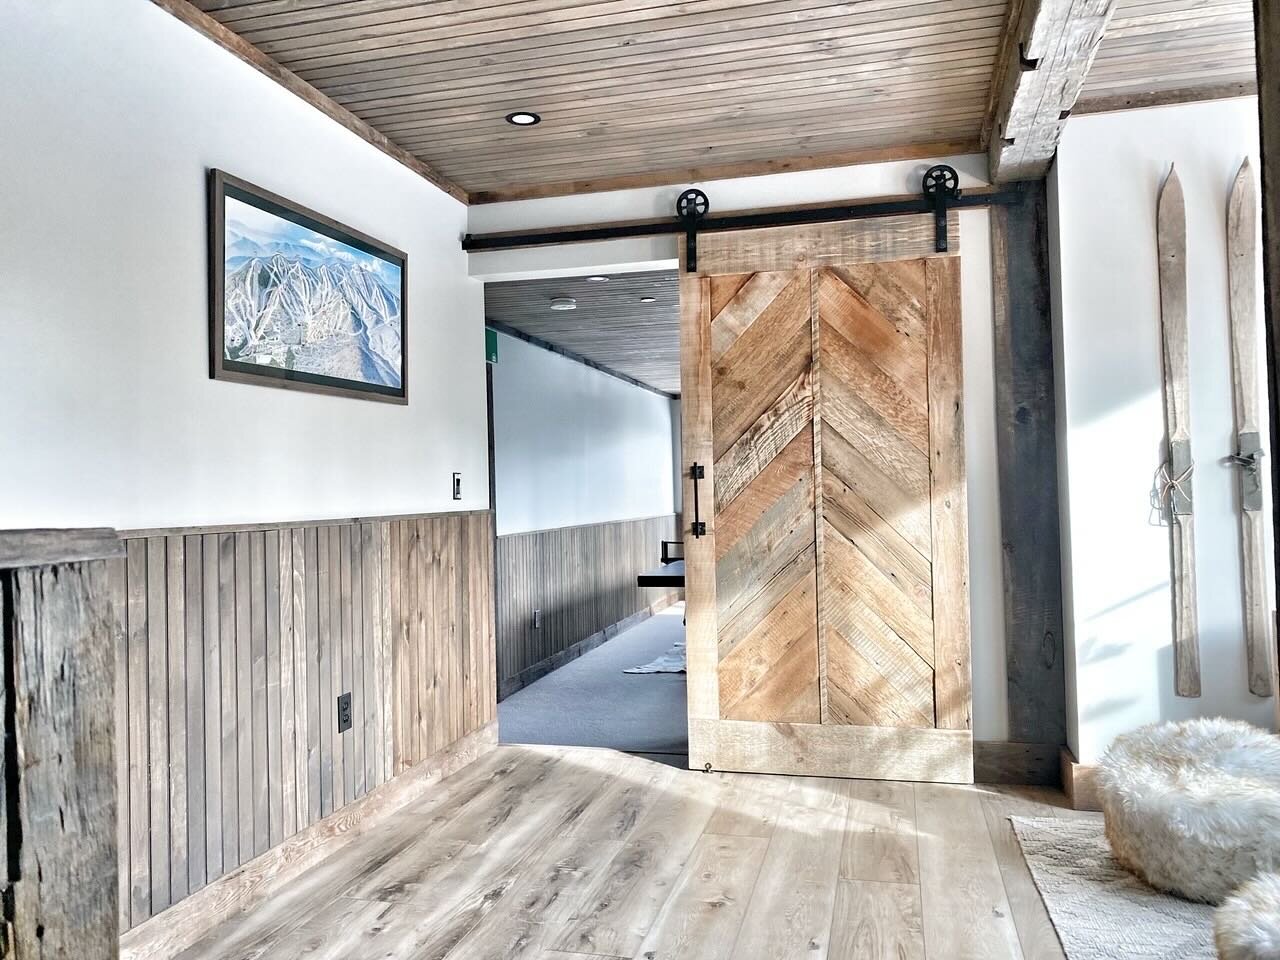 Nathan has a ski house in Maine. Everyone with a ski house needs this!

#barnwood #renovation #northofboston #ipswichma #marbleheadma #salemma #essexma #essexcountyma #capeannhome #capeannma #rowleyma #newburyport #amesburyma #farmhouse #beverlyma #m